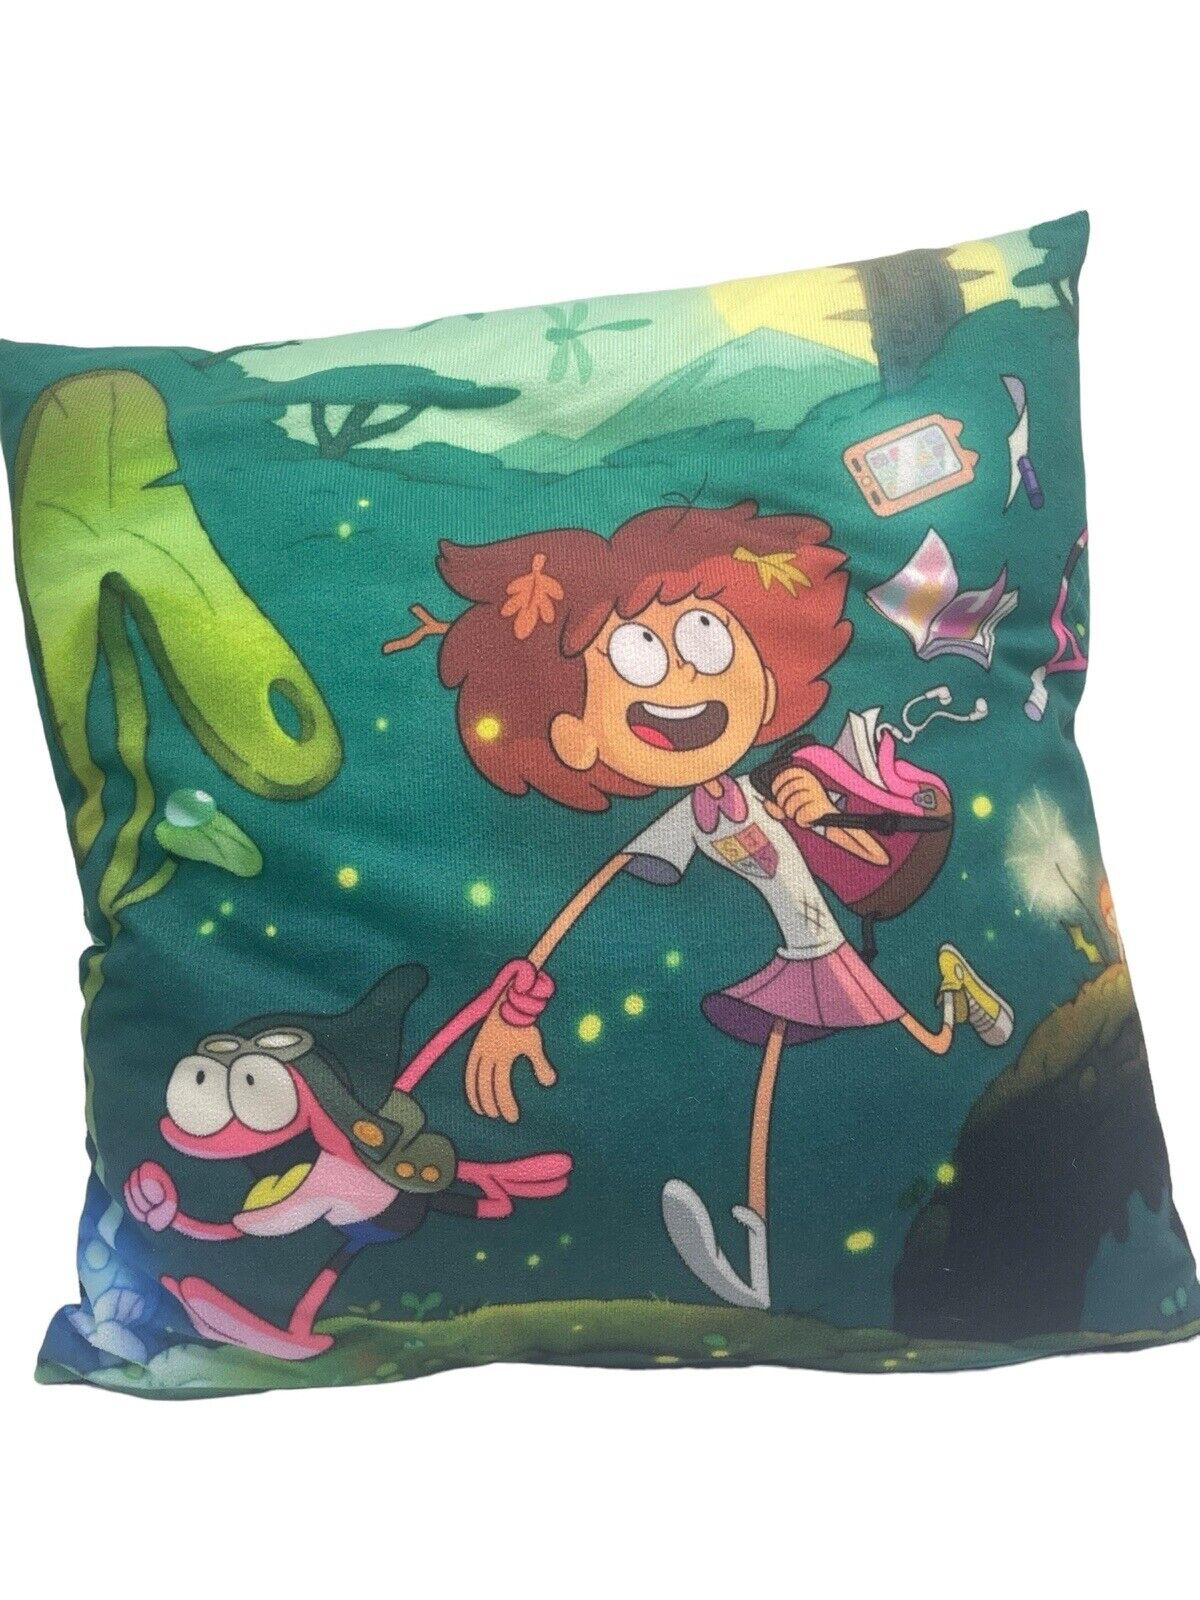 Disney Channel  Amphibia Pillow Decorative RARE